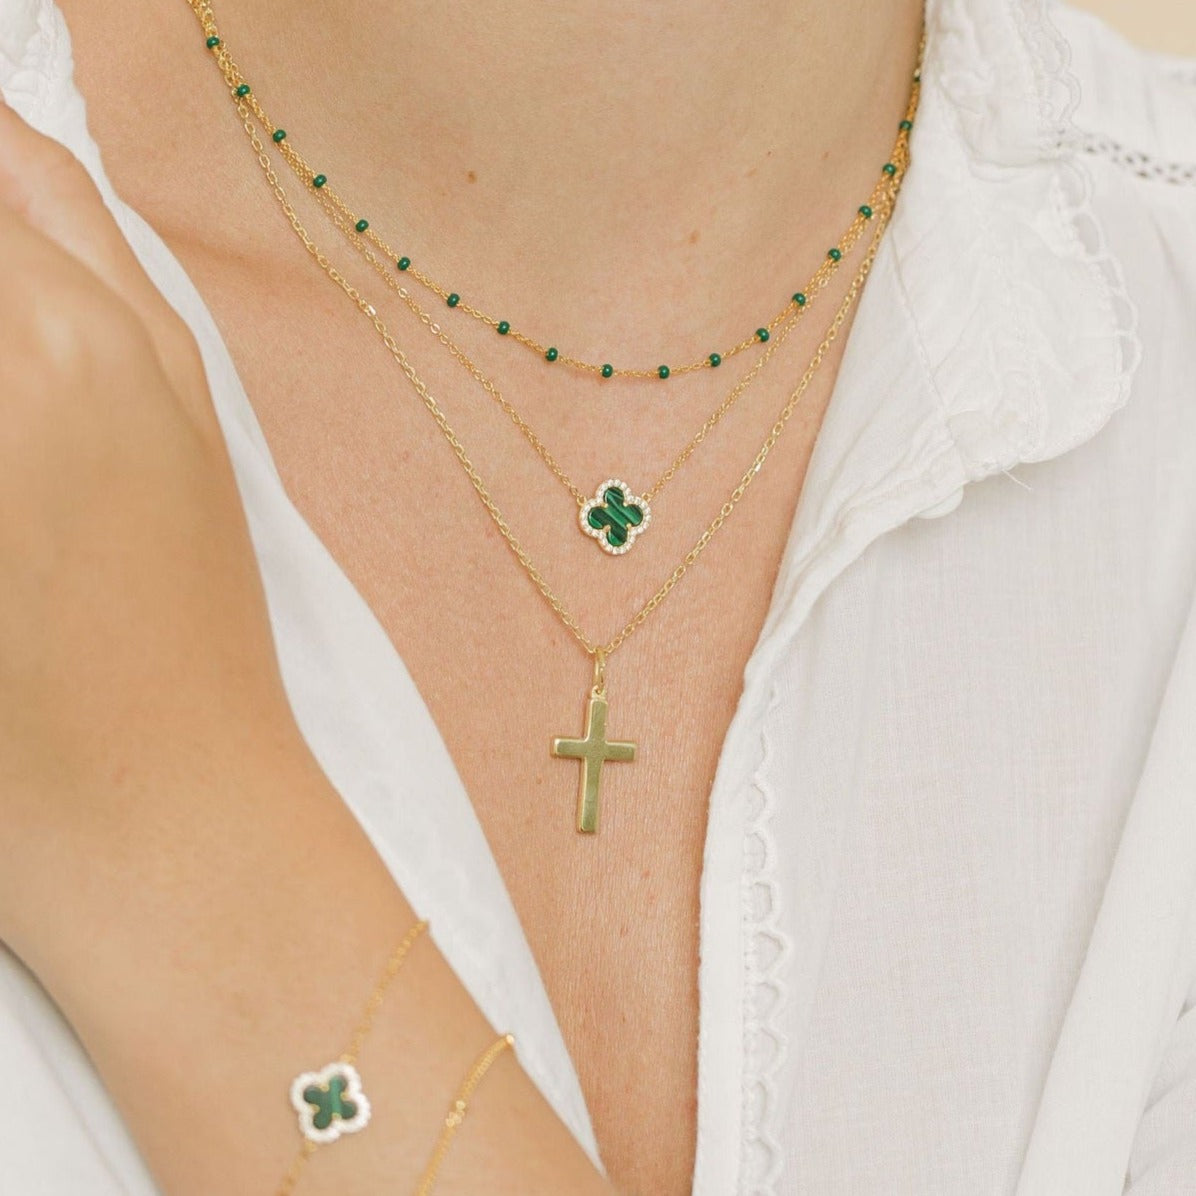 Medium Cross Gold Necklace (16-18" Chain)